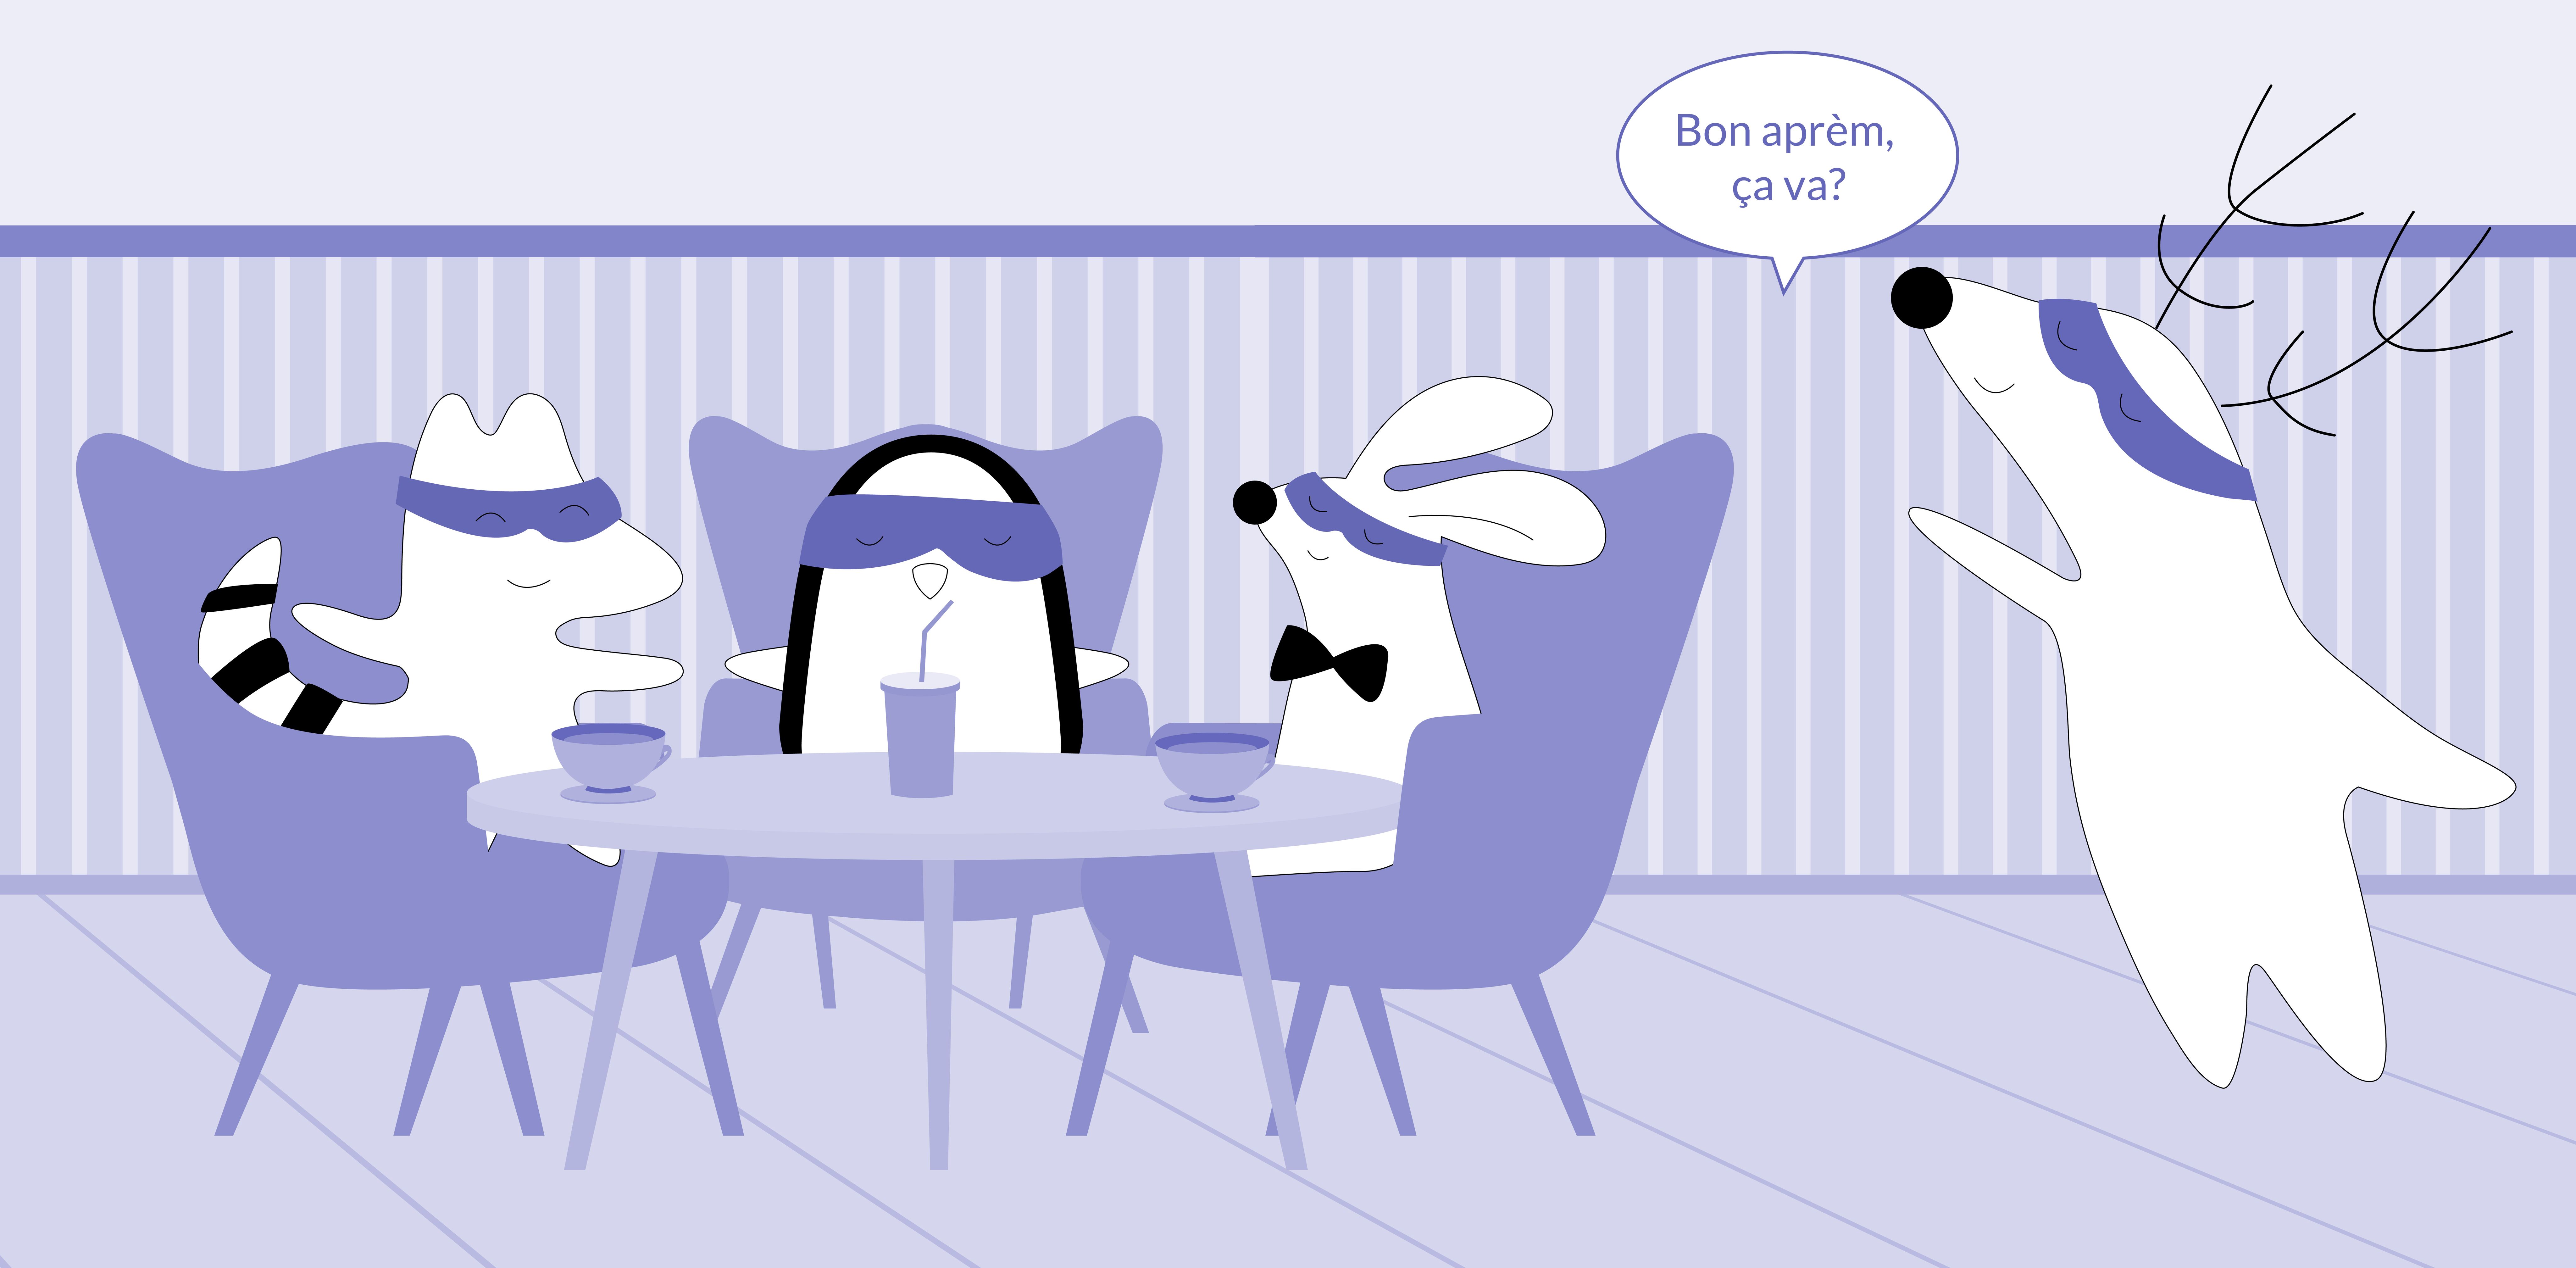 Pocky, Benji, Iggy, and Soren are meeting at the coffee shop. Soren greets everyone, saying, “Bon aprèm, ça va?”